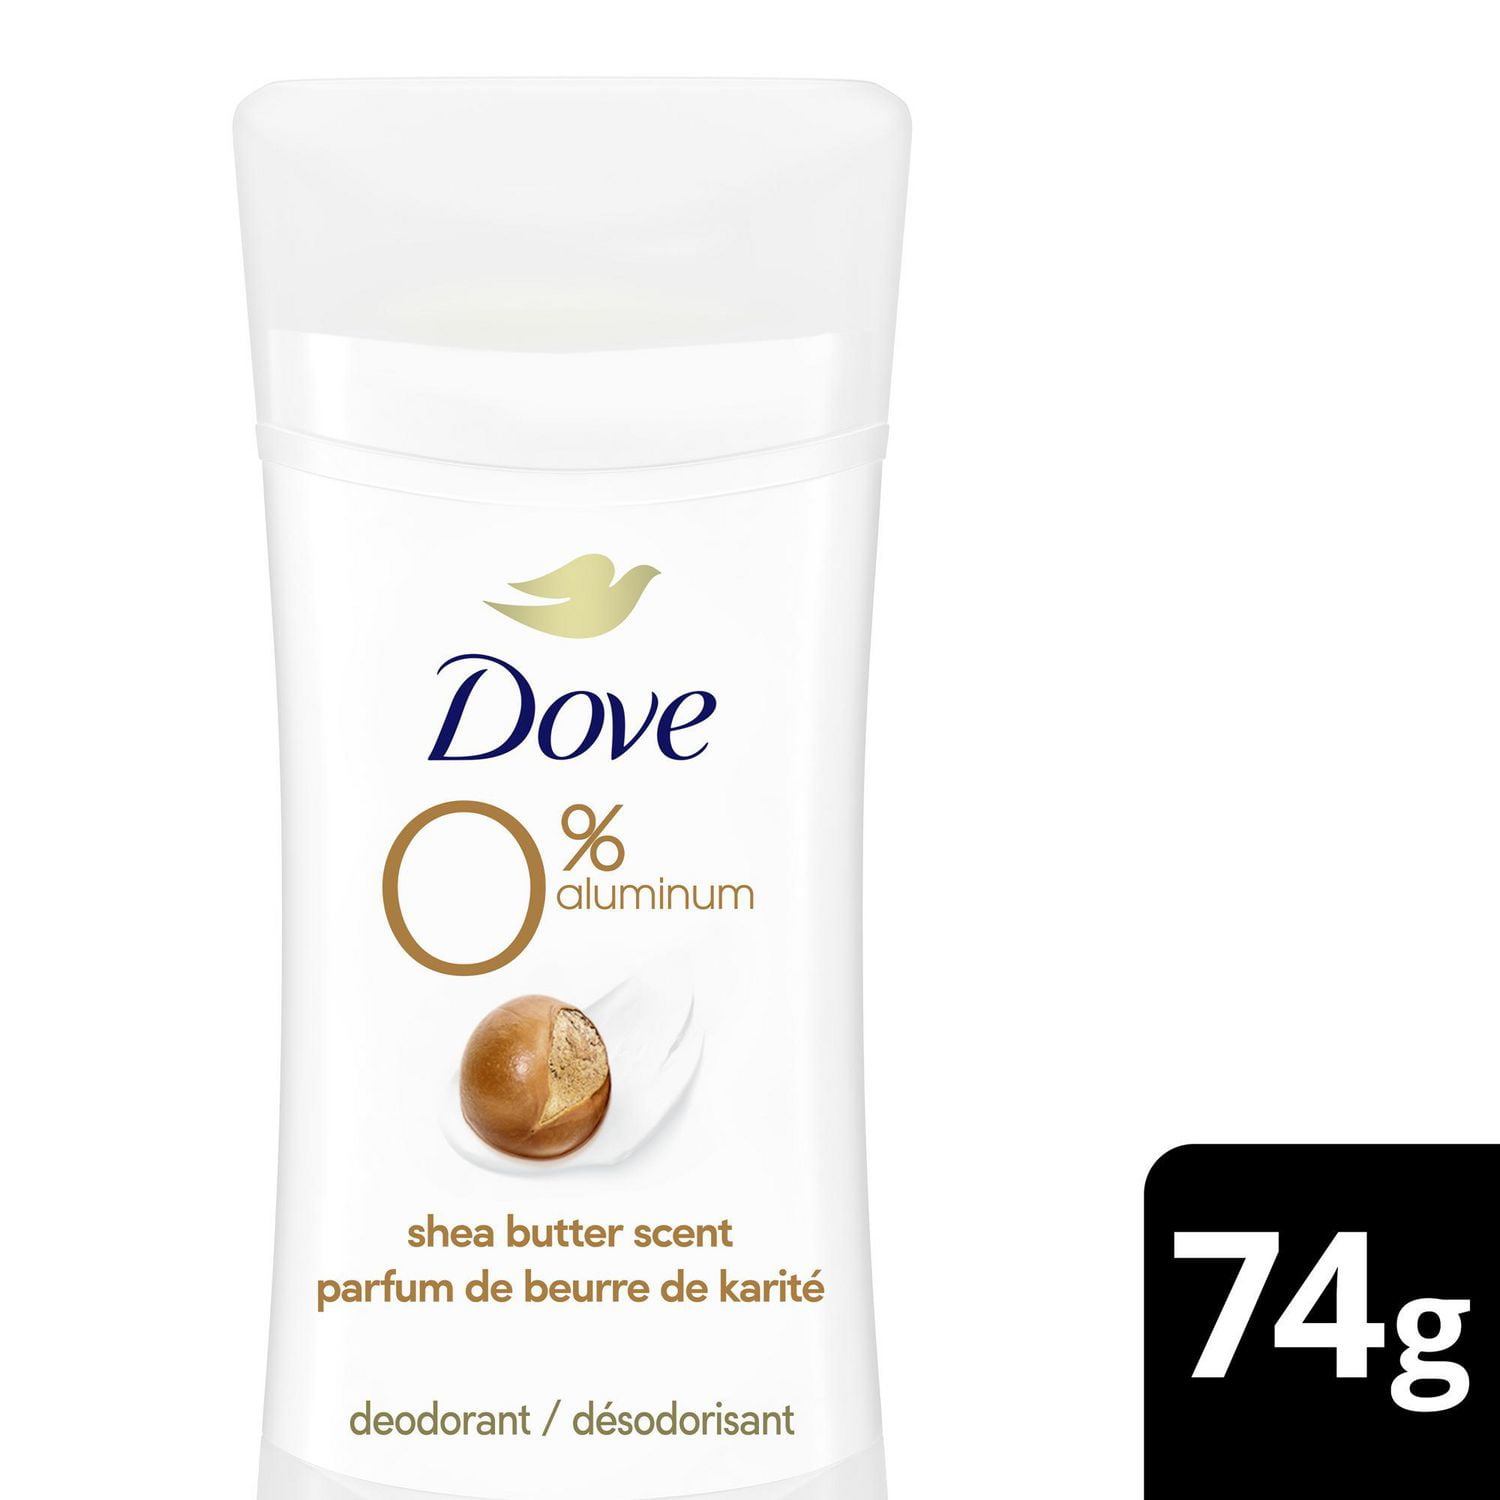 Dove Advanced Care Cool Essentials Antiperspirant, 45 g